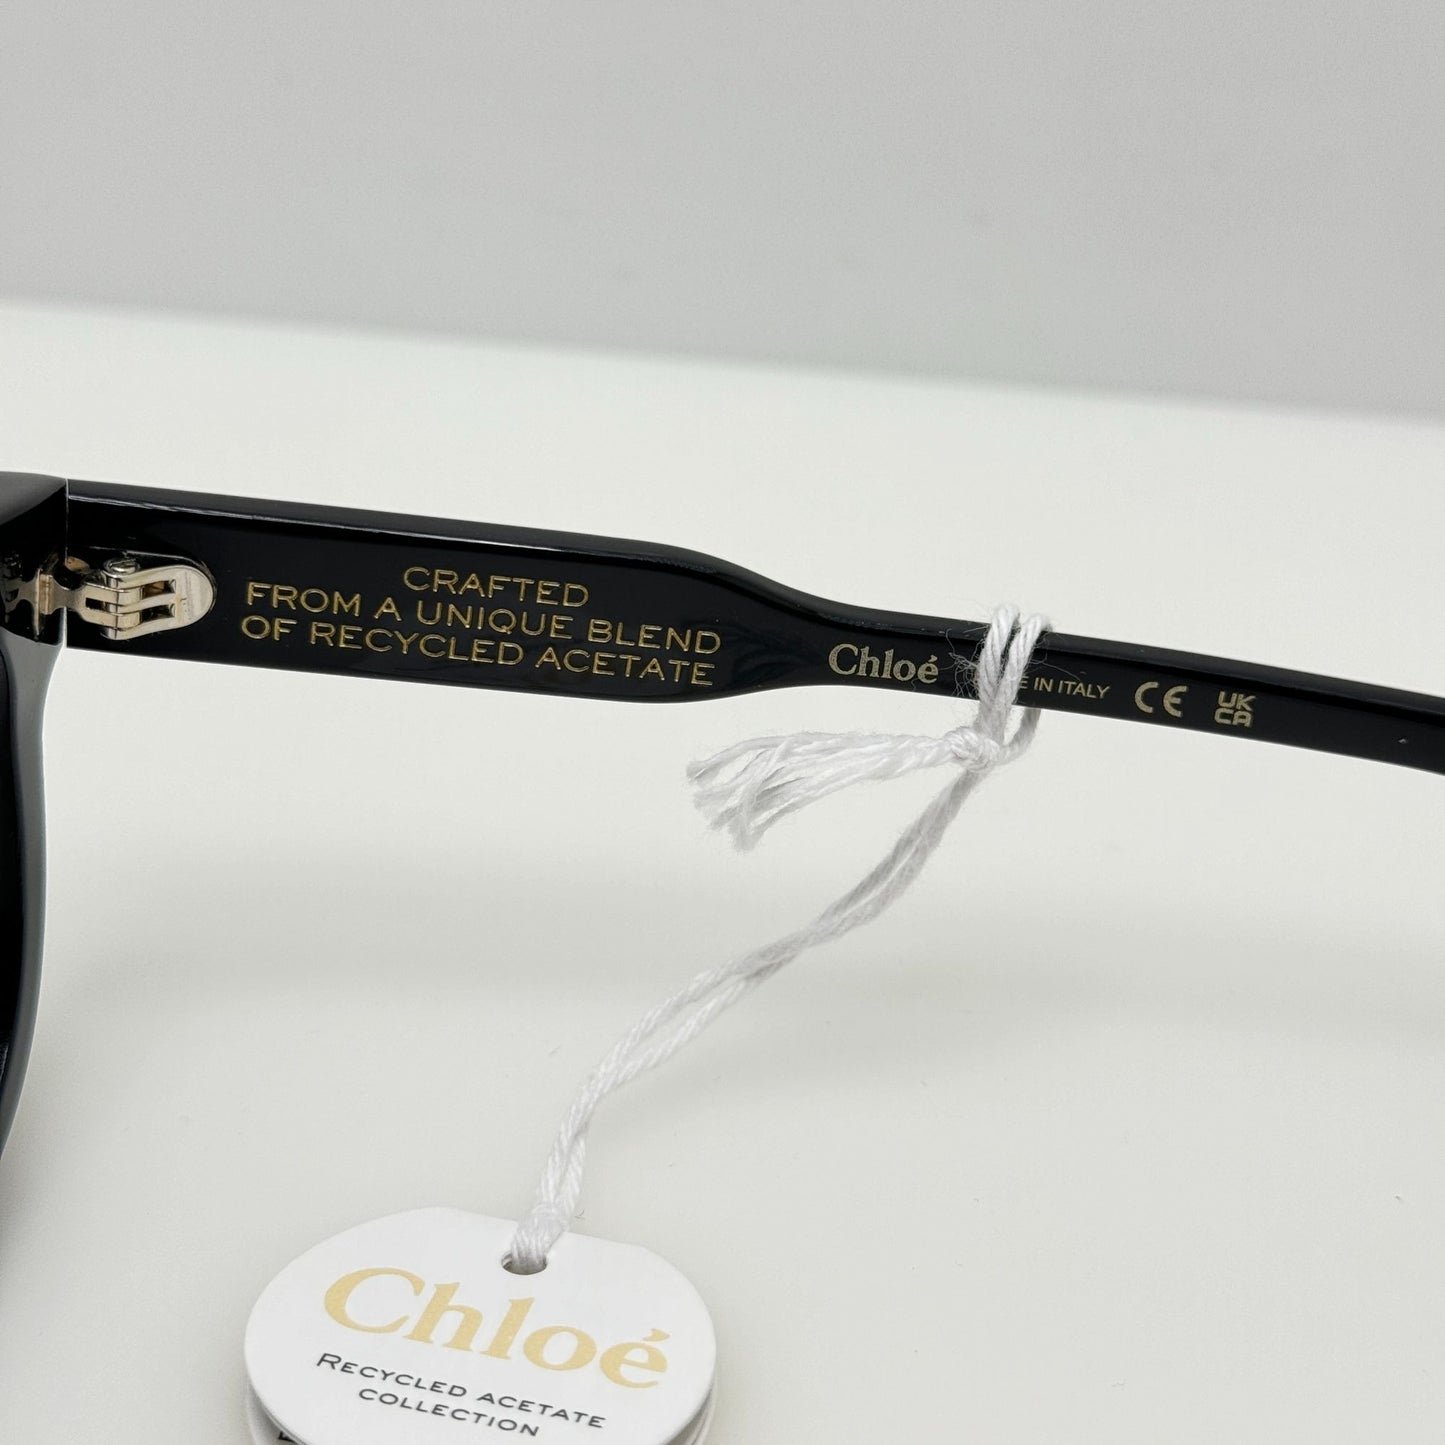 Chloe Eyeglasses Eye Glasses Frames CH0157OA 001 50-18-150 Italy